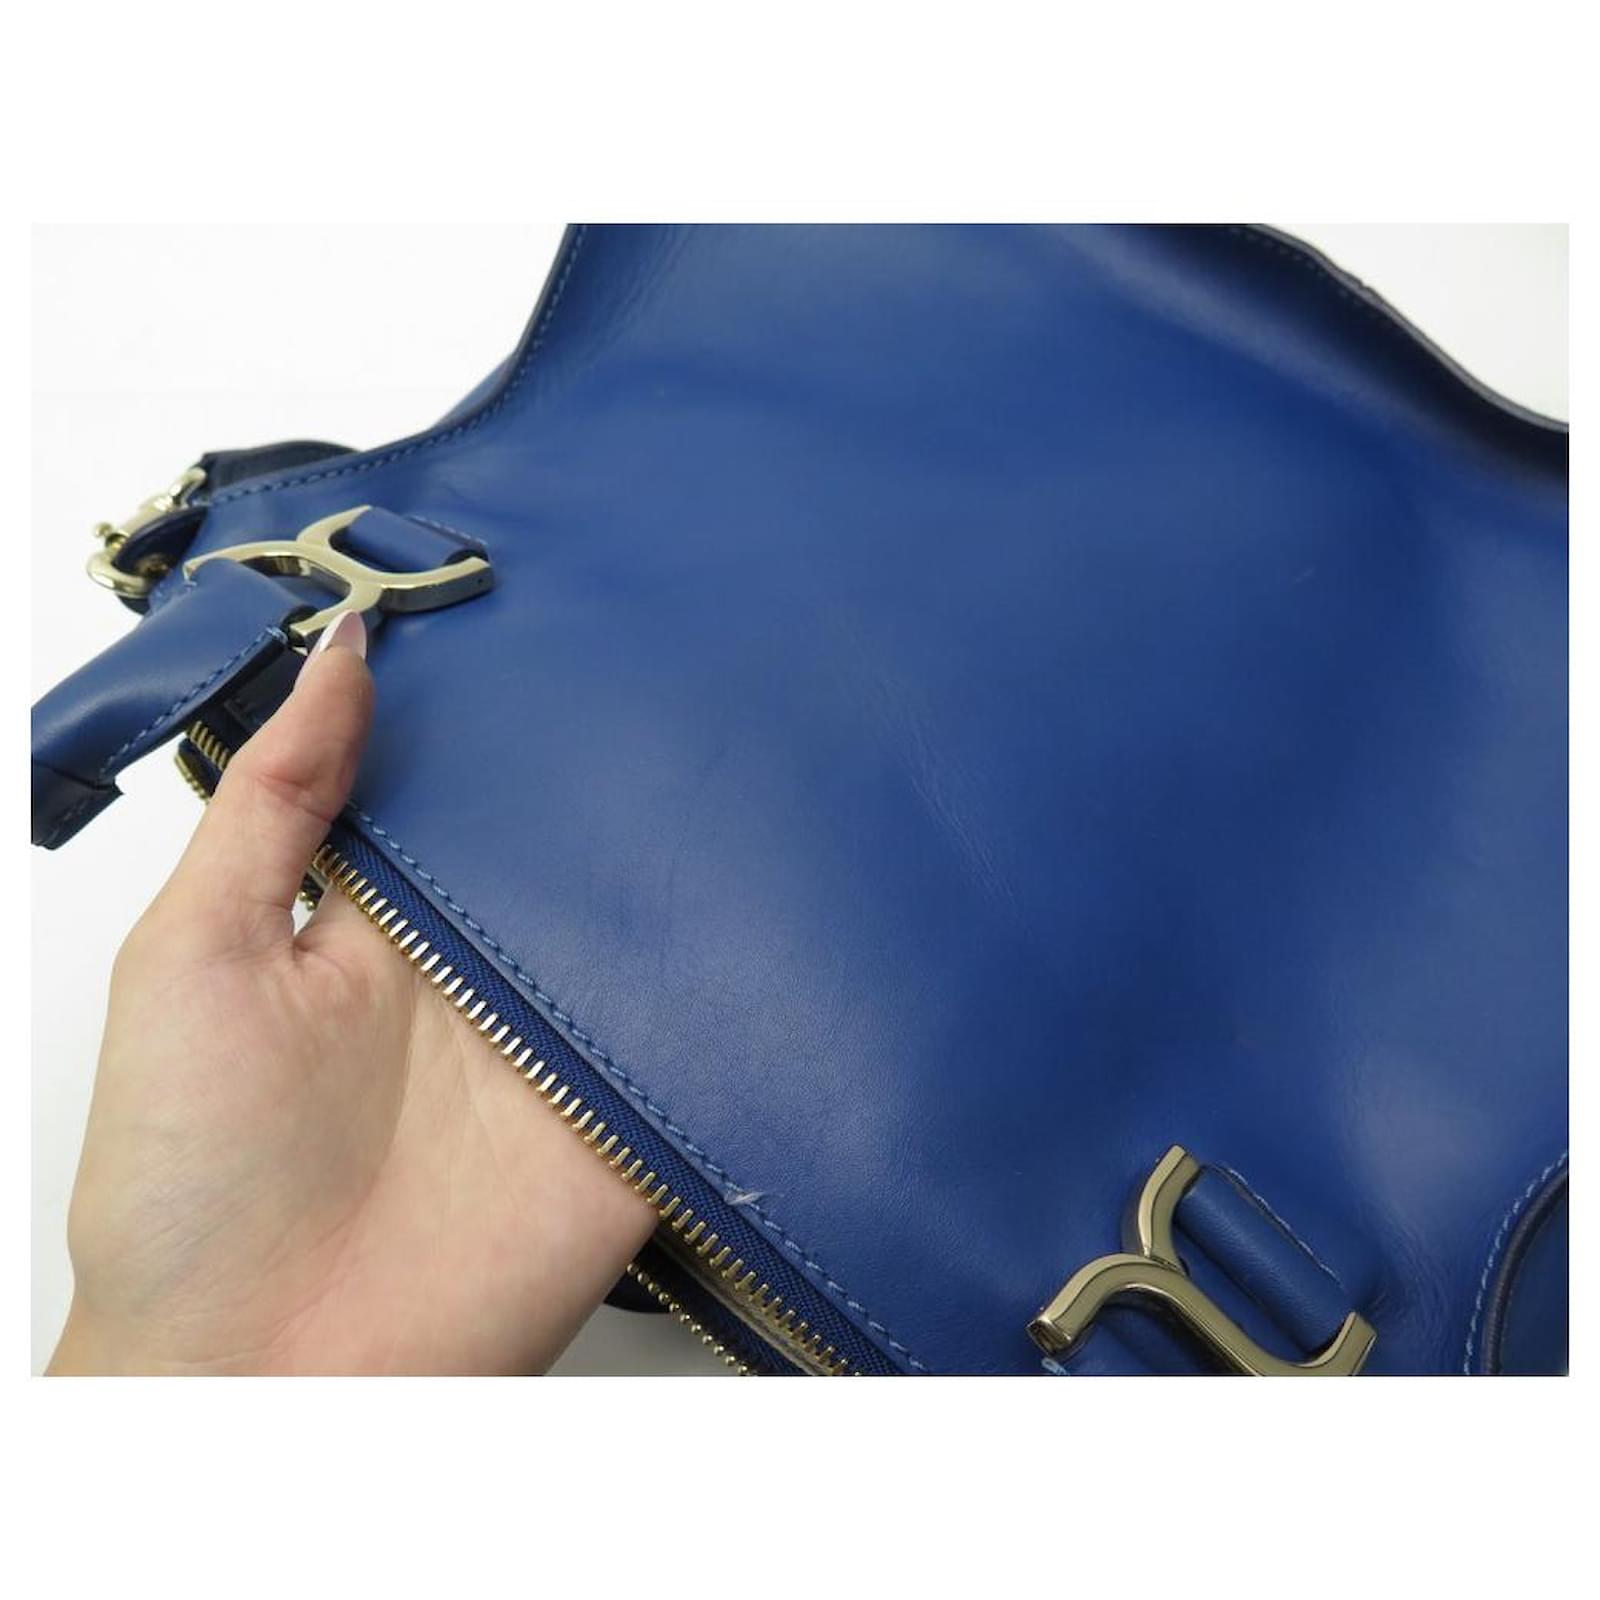 Chloé CHLOE MARCIE MEDIUM SMOOTH BLUE LEATHER BANDOULIERE HAND BAG